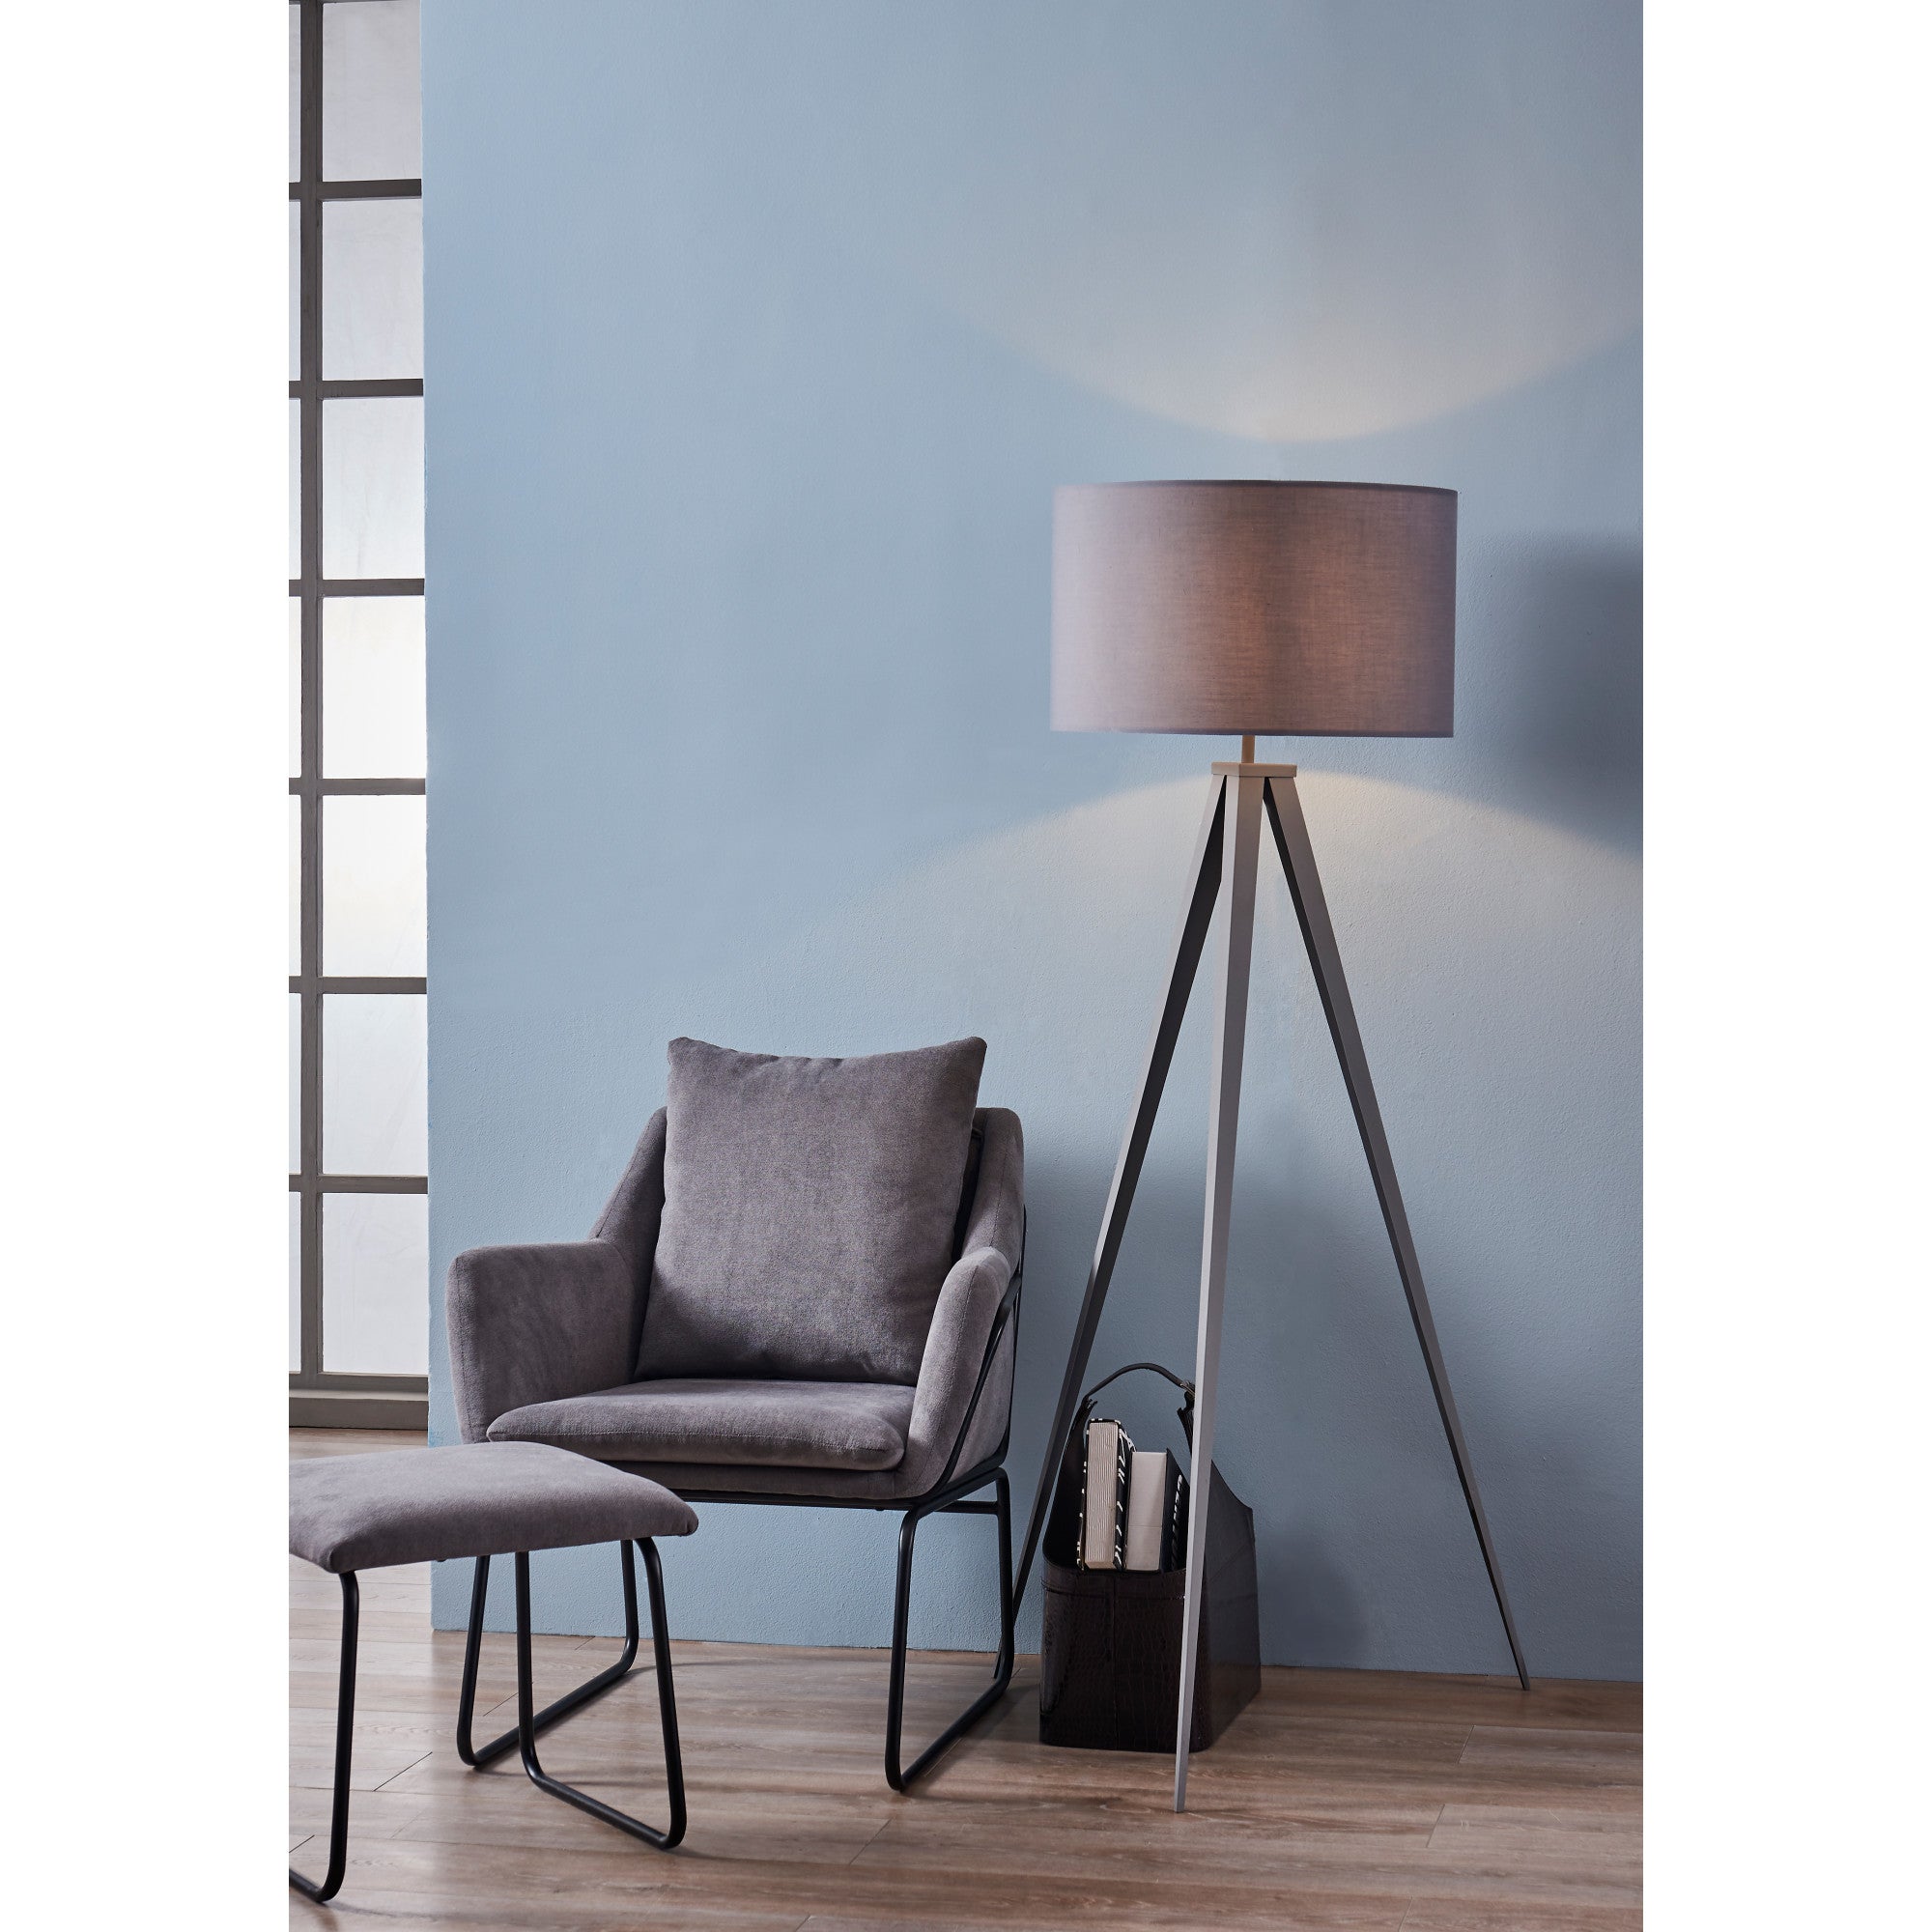 Teamson Home Romanza 62" Postmodern Tripod Floor Lamp with Drum Shade, Gray